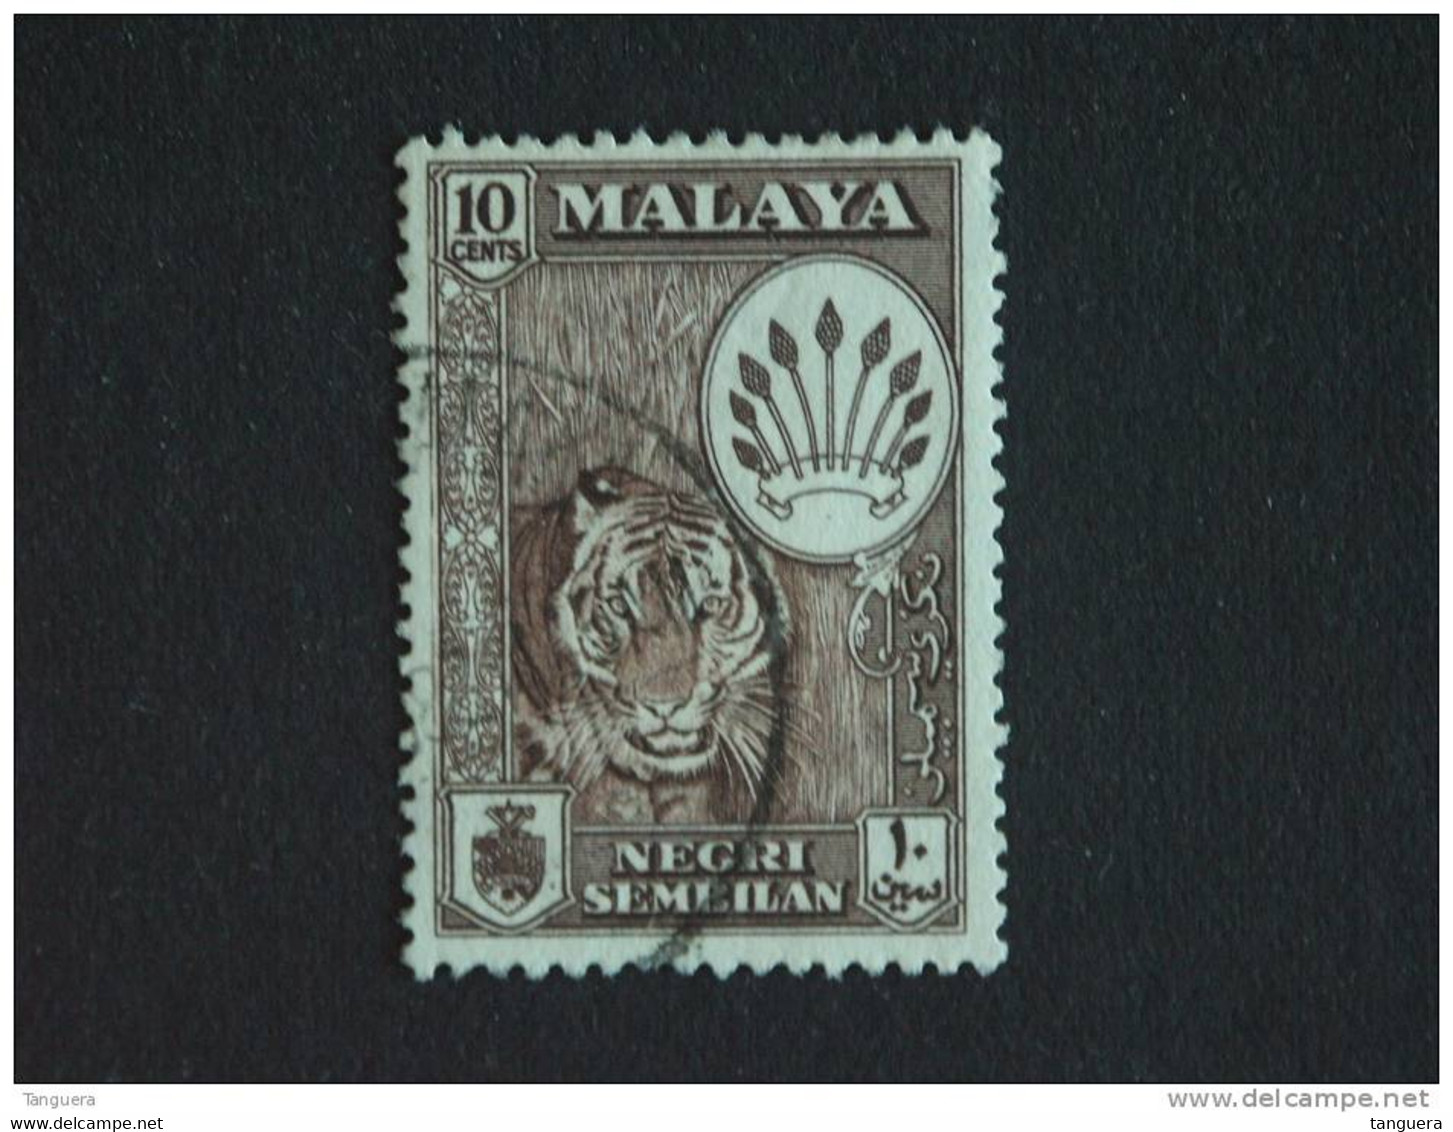 Maleisië Malaya Malaysia Negri Sembilan 1957 Tigre Tijger Yv 66 O - Negri Sembilan